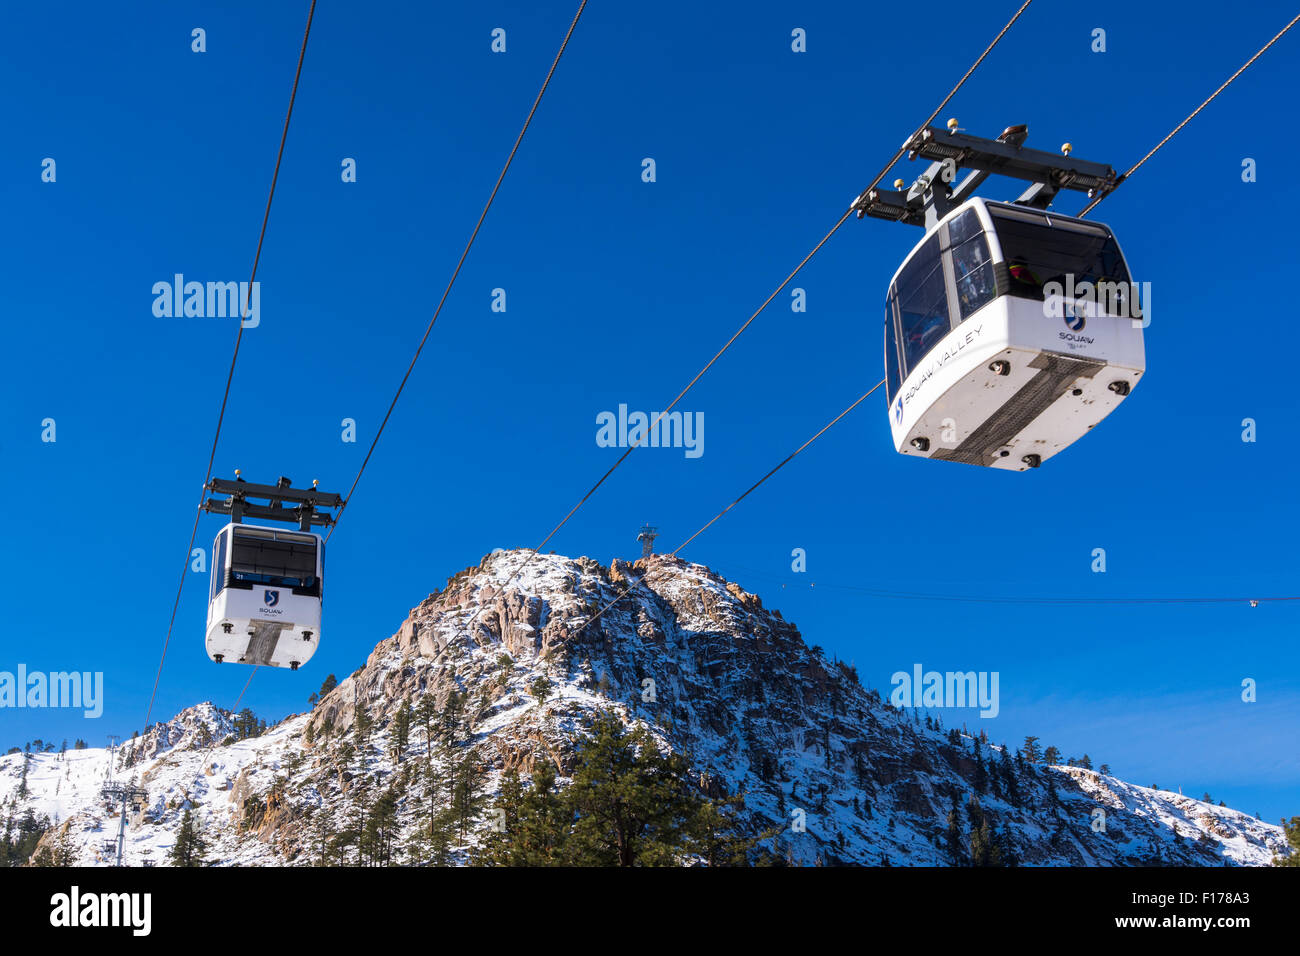 Gondola at the village, Squaw Valley resort, Lake Tahoe, California Stock Photo